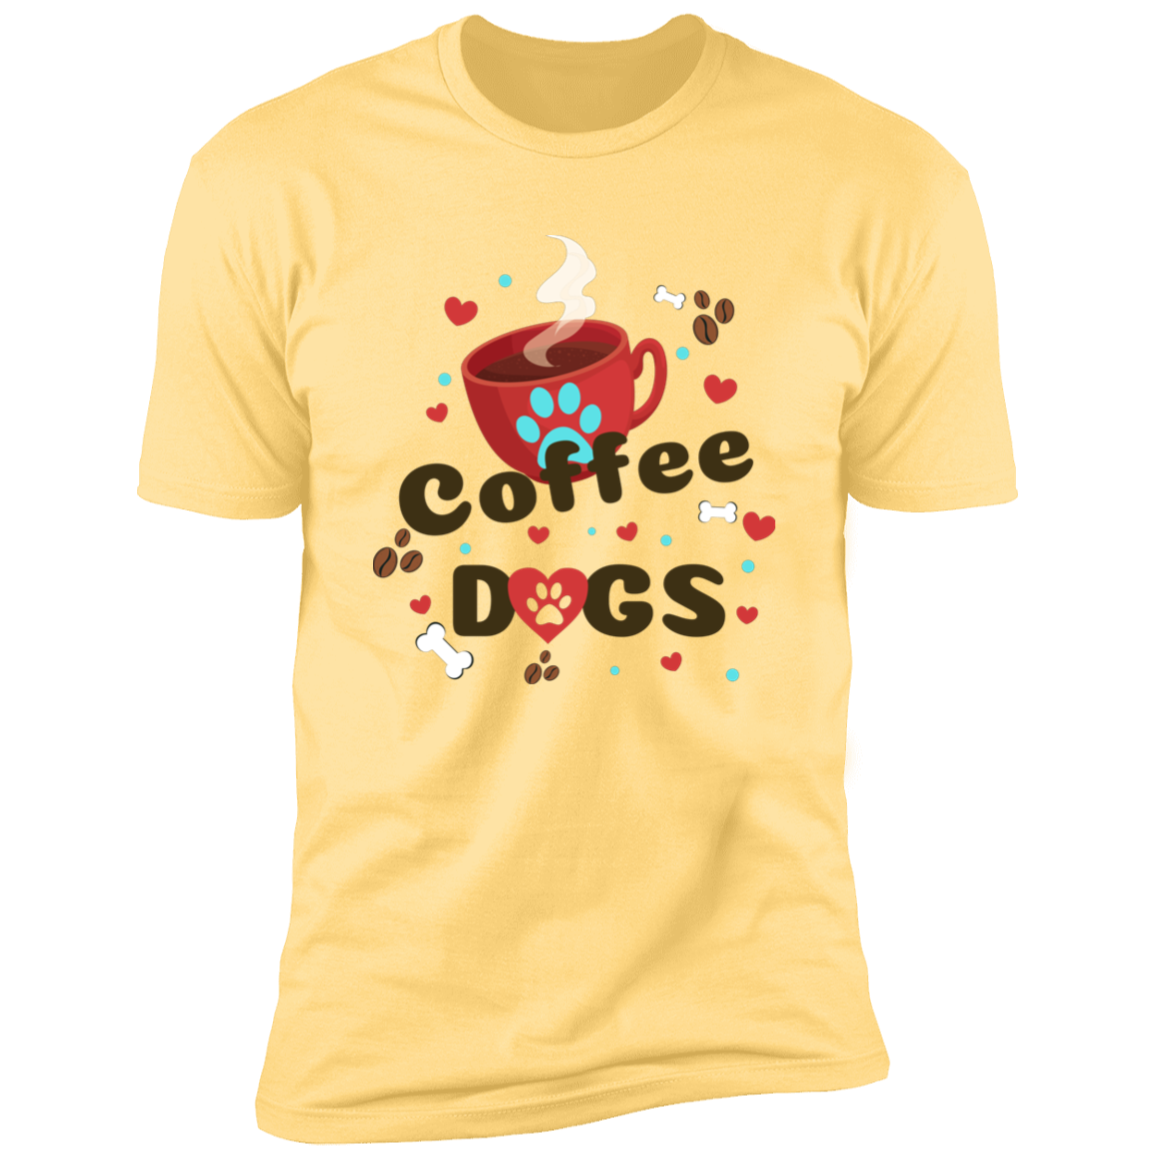 Coffee Dogs T-shirt, Dog Shirt for humans, in banana cream